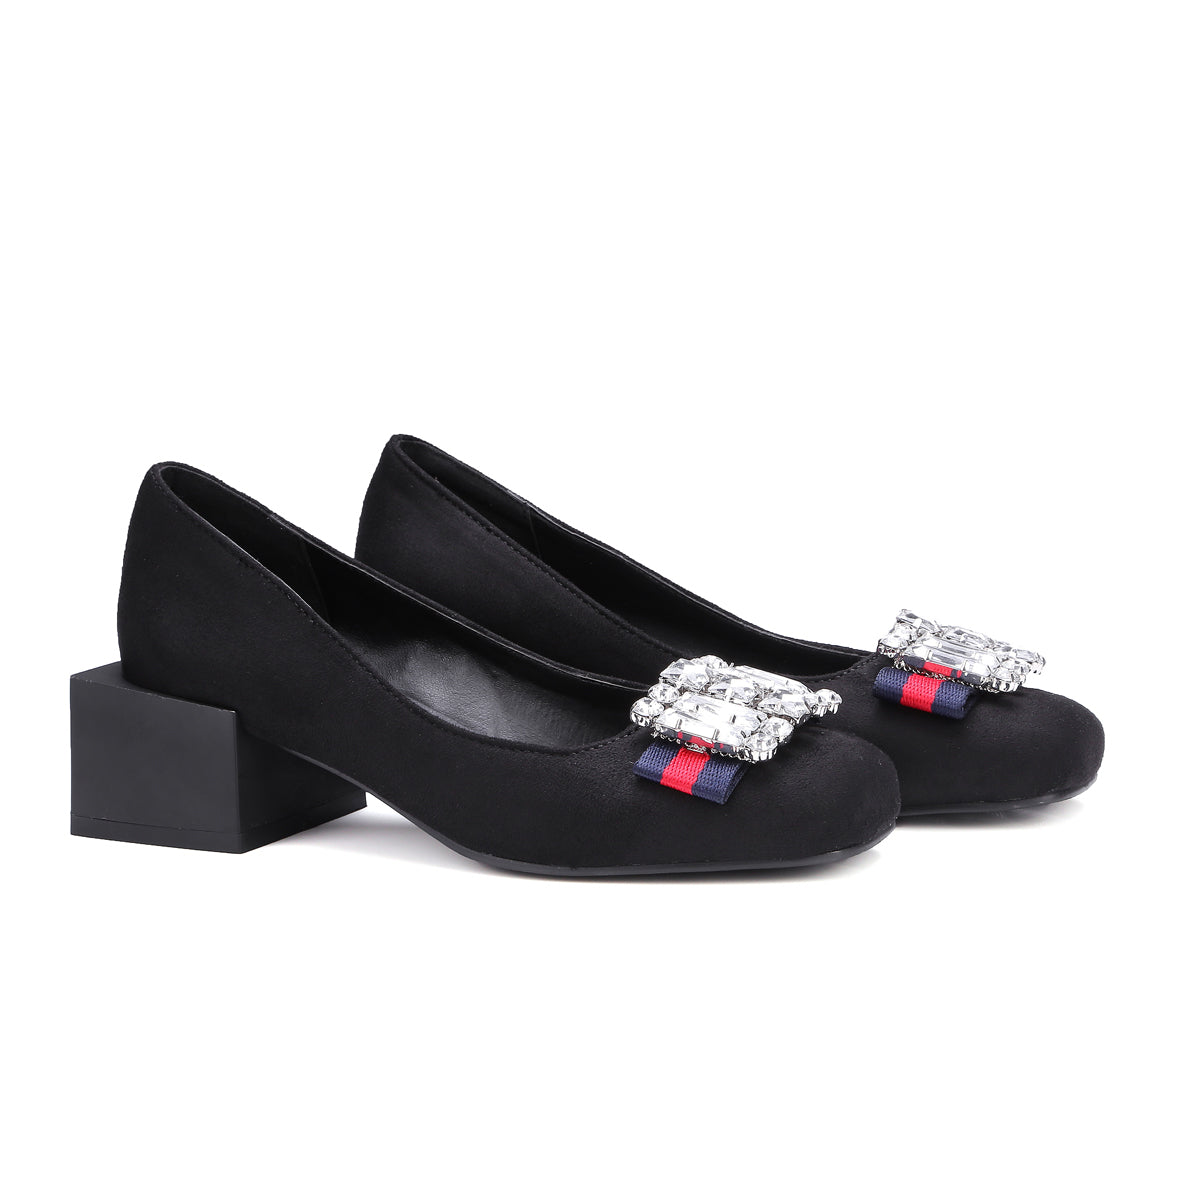 Bigsizeheels Suede square toe rhinestones with thick heels - Black freeshipping - bigsizeheel®-size5-size15 -All Plus Sizes Available!